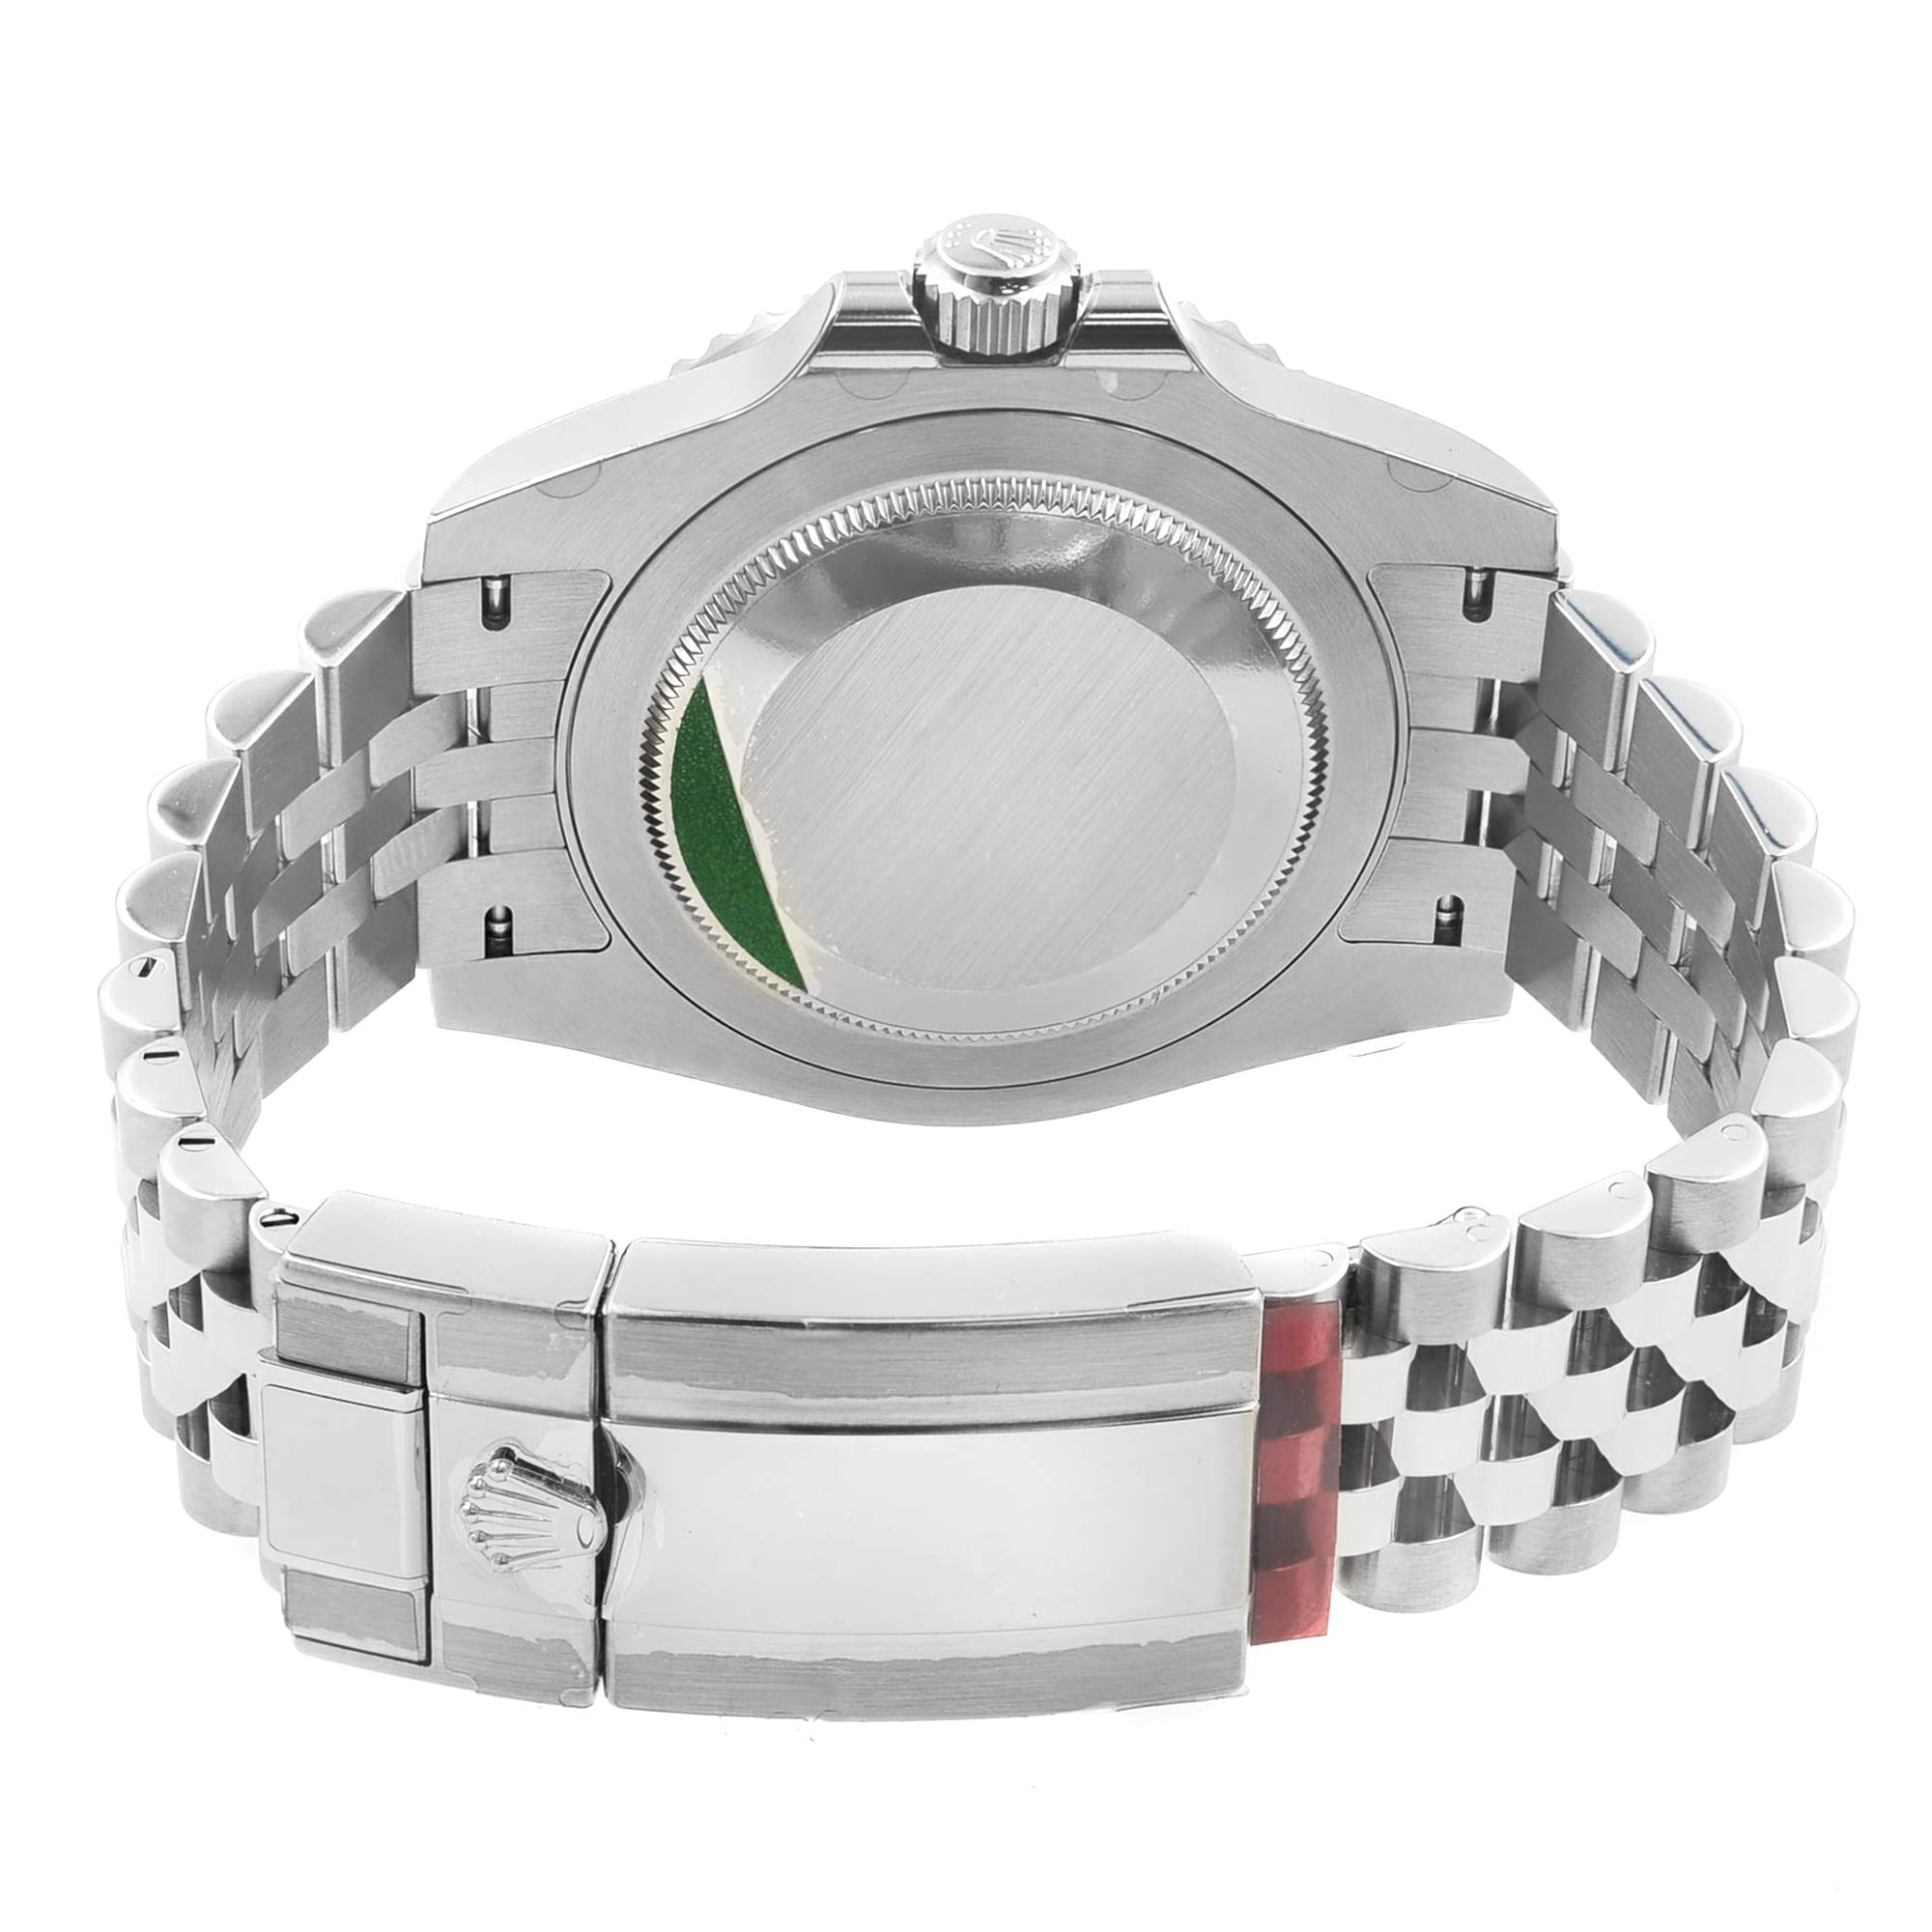 Rolex GMT-Master II GMT Black Dial Men's Watch 126710blnr